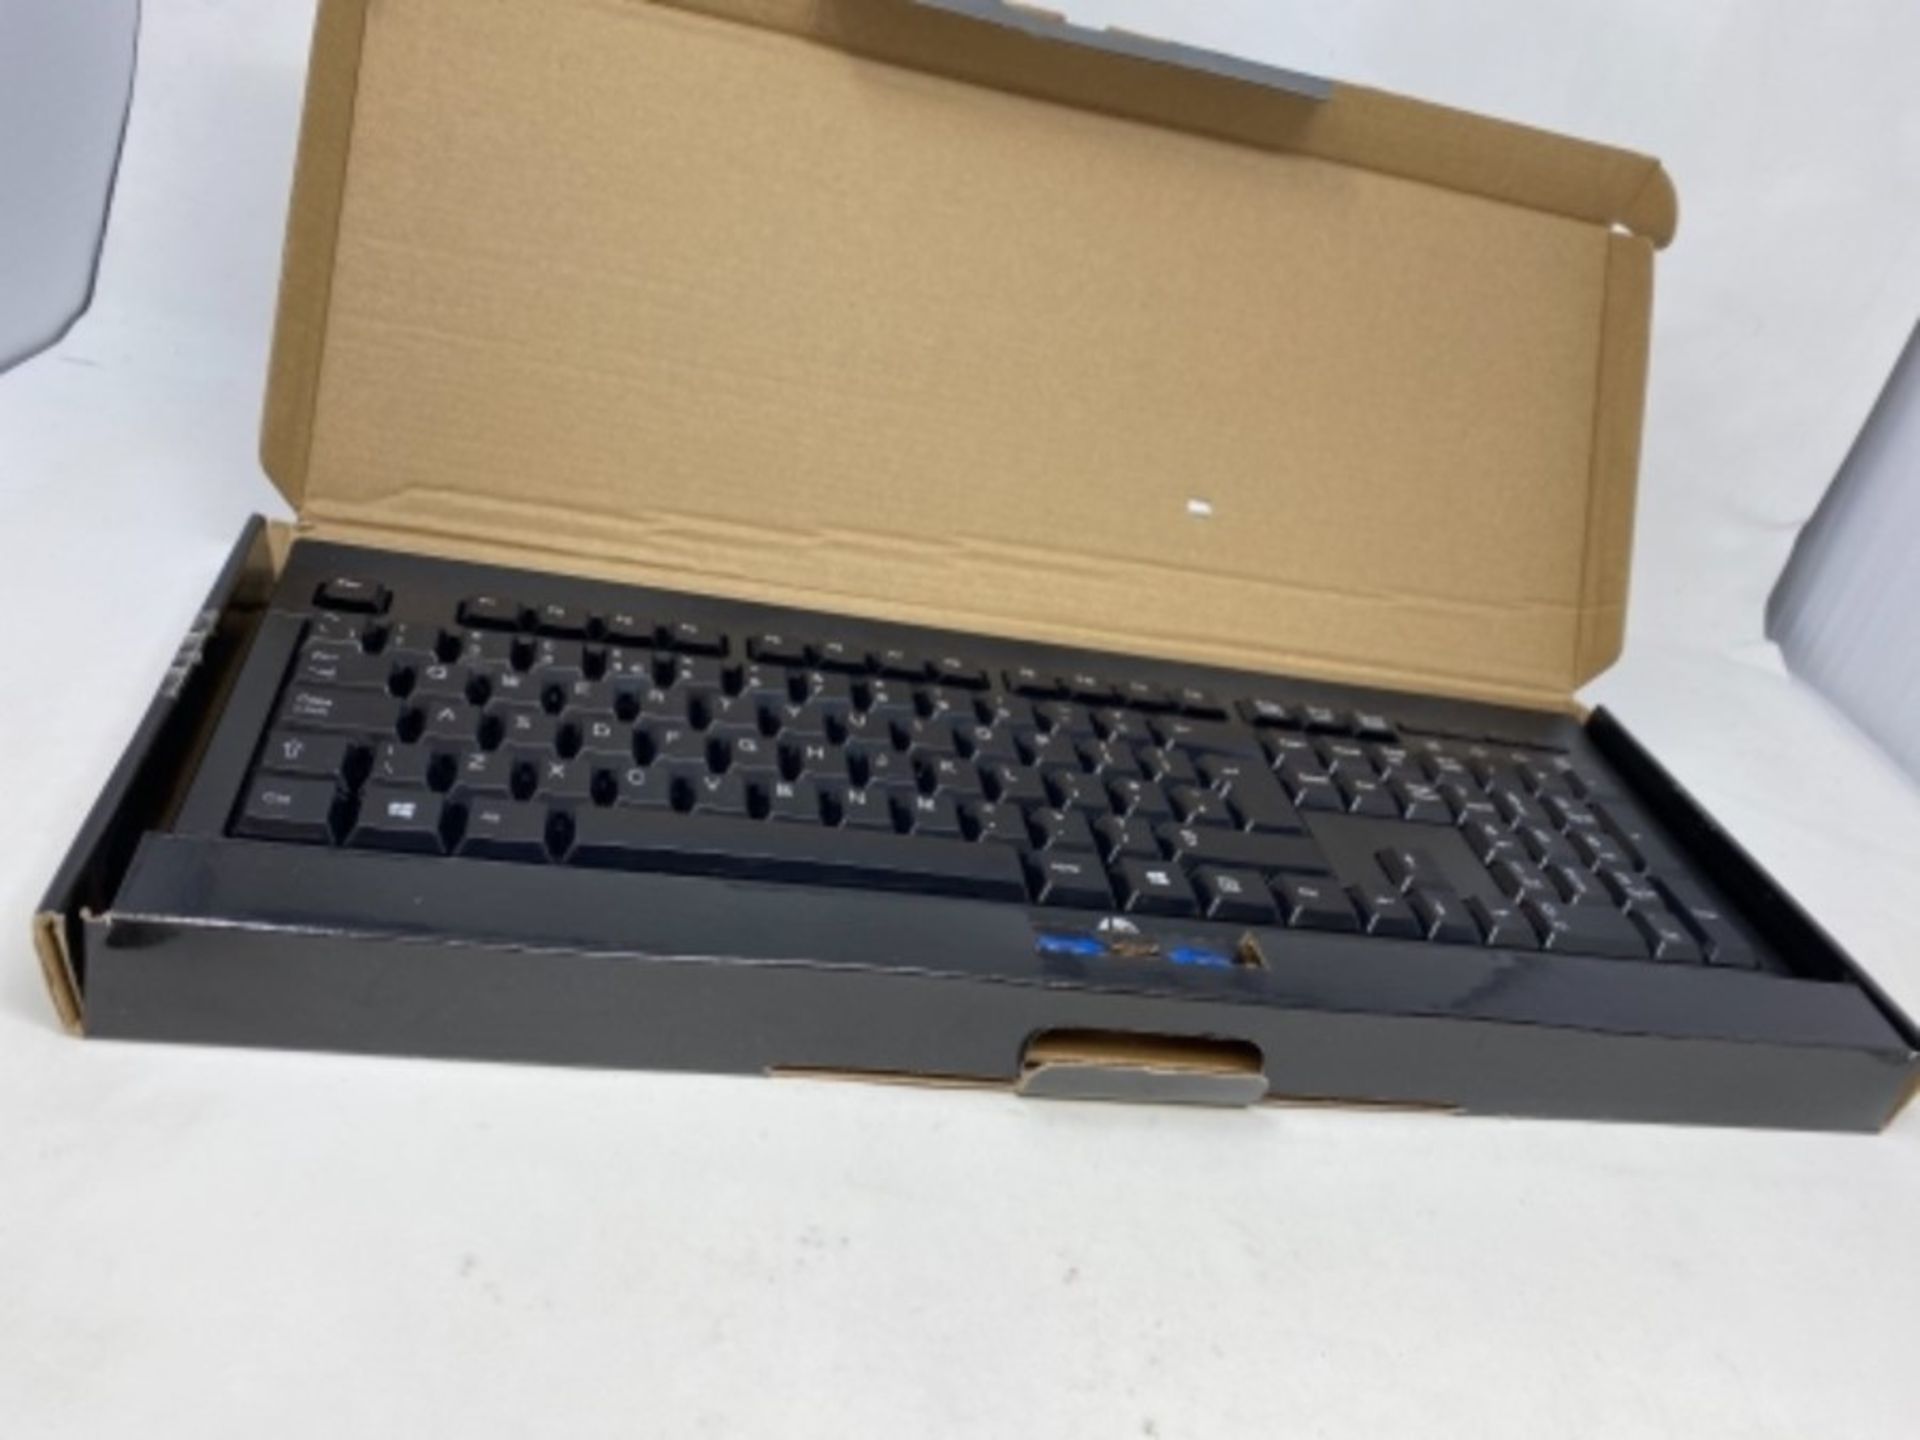 HP K2500 Black 2.4 GHz USB Wireless Keyboard - Image 2 of 2